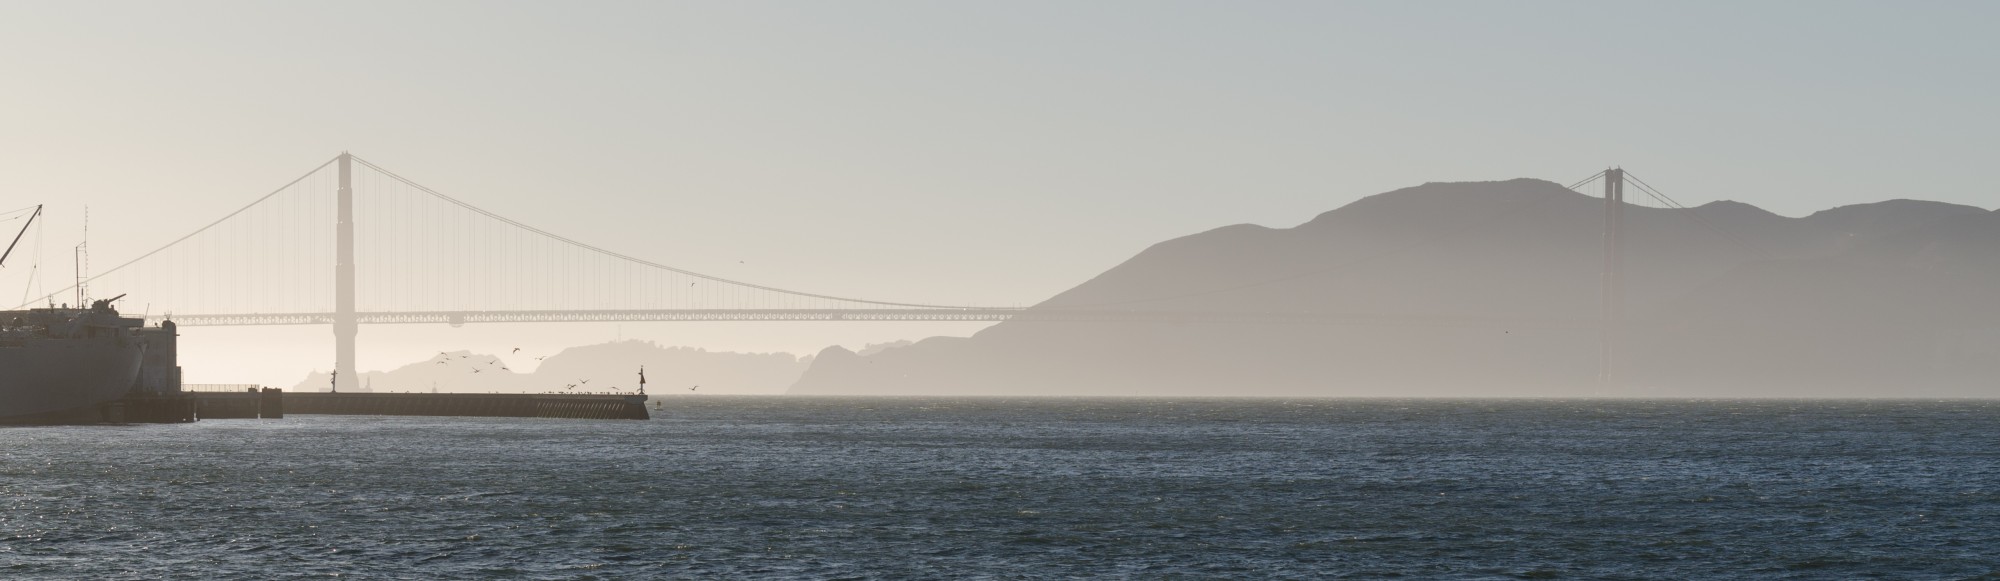 Golden Gate Bridge in fog from Pier 39 2013